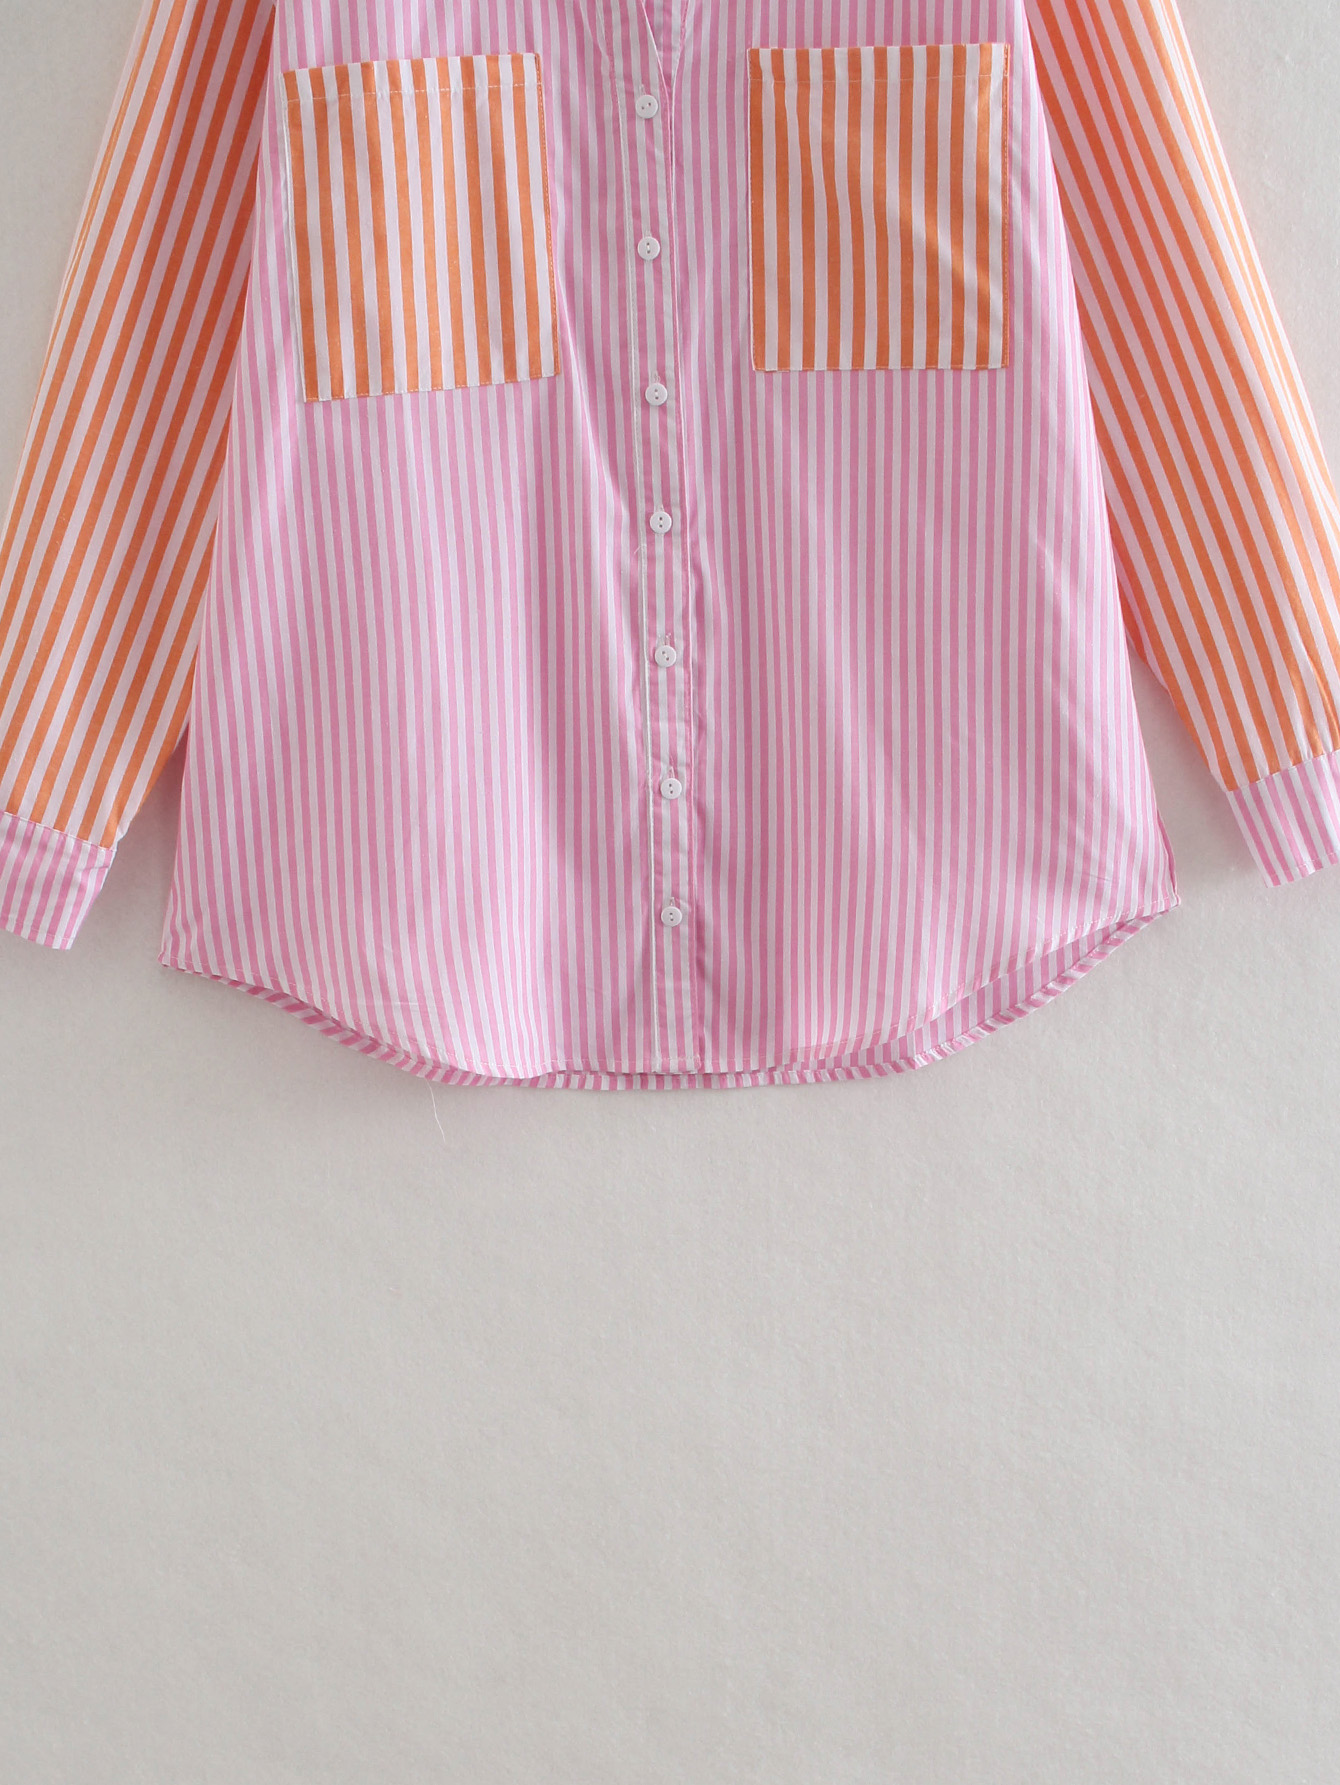 Mixed Color Stripe Long Sleeve Shirt - Blouses & Shirts - Uniqistic.com